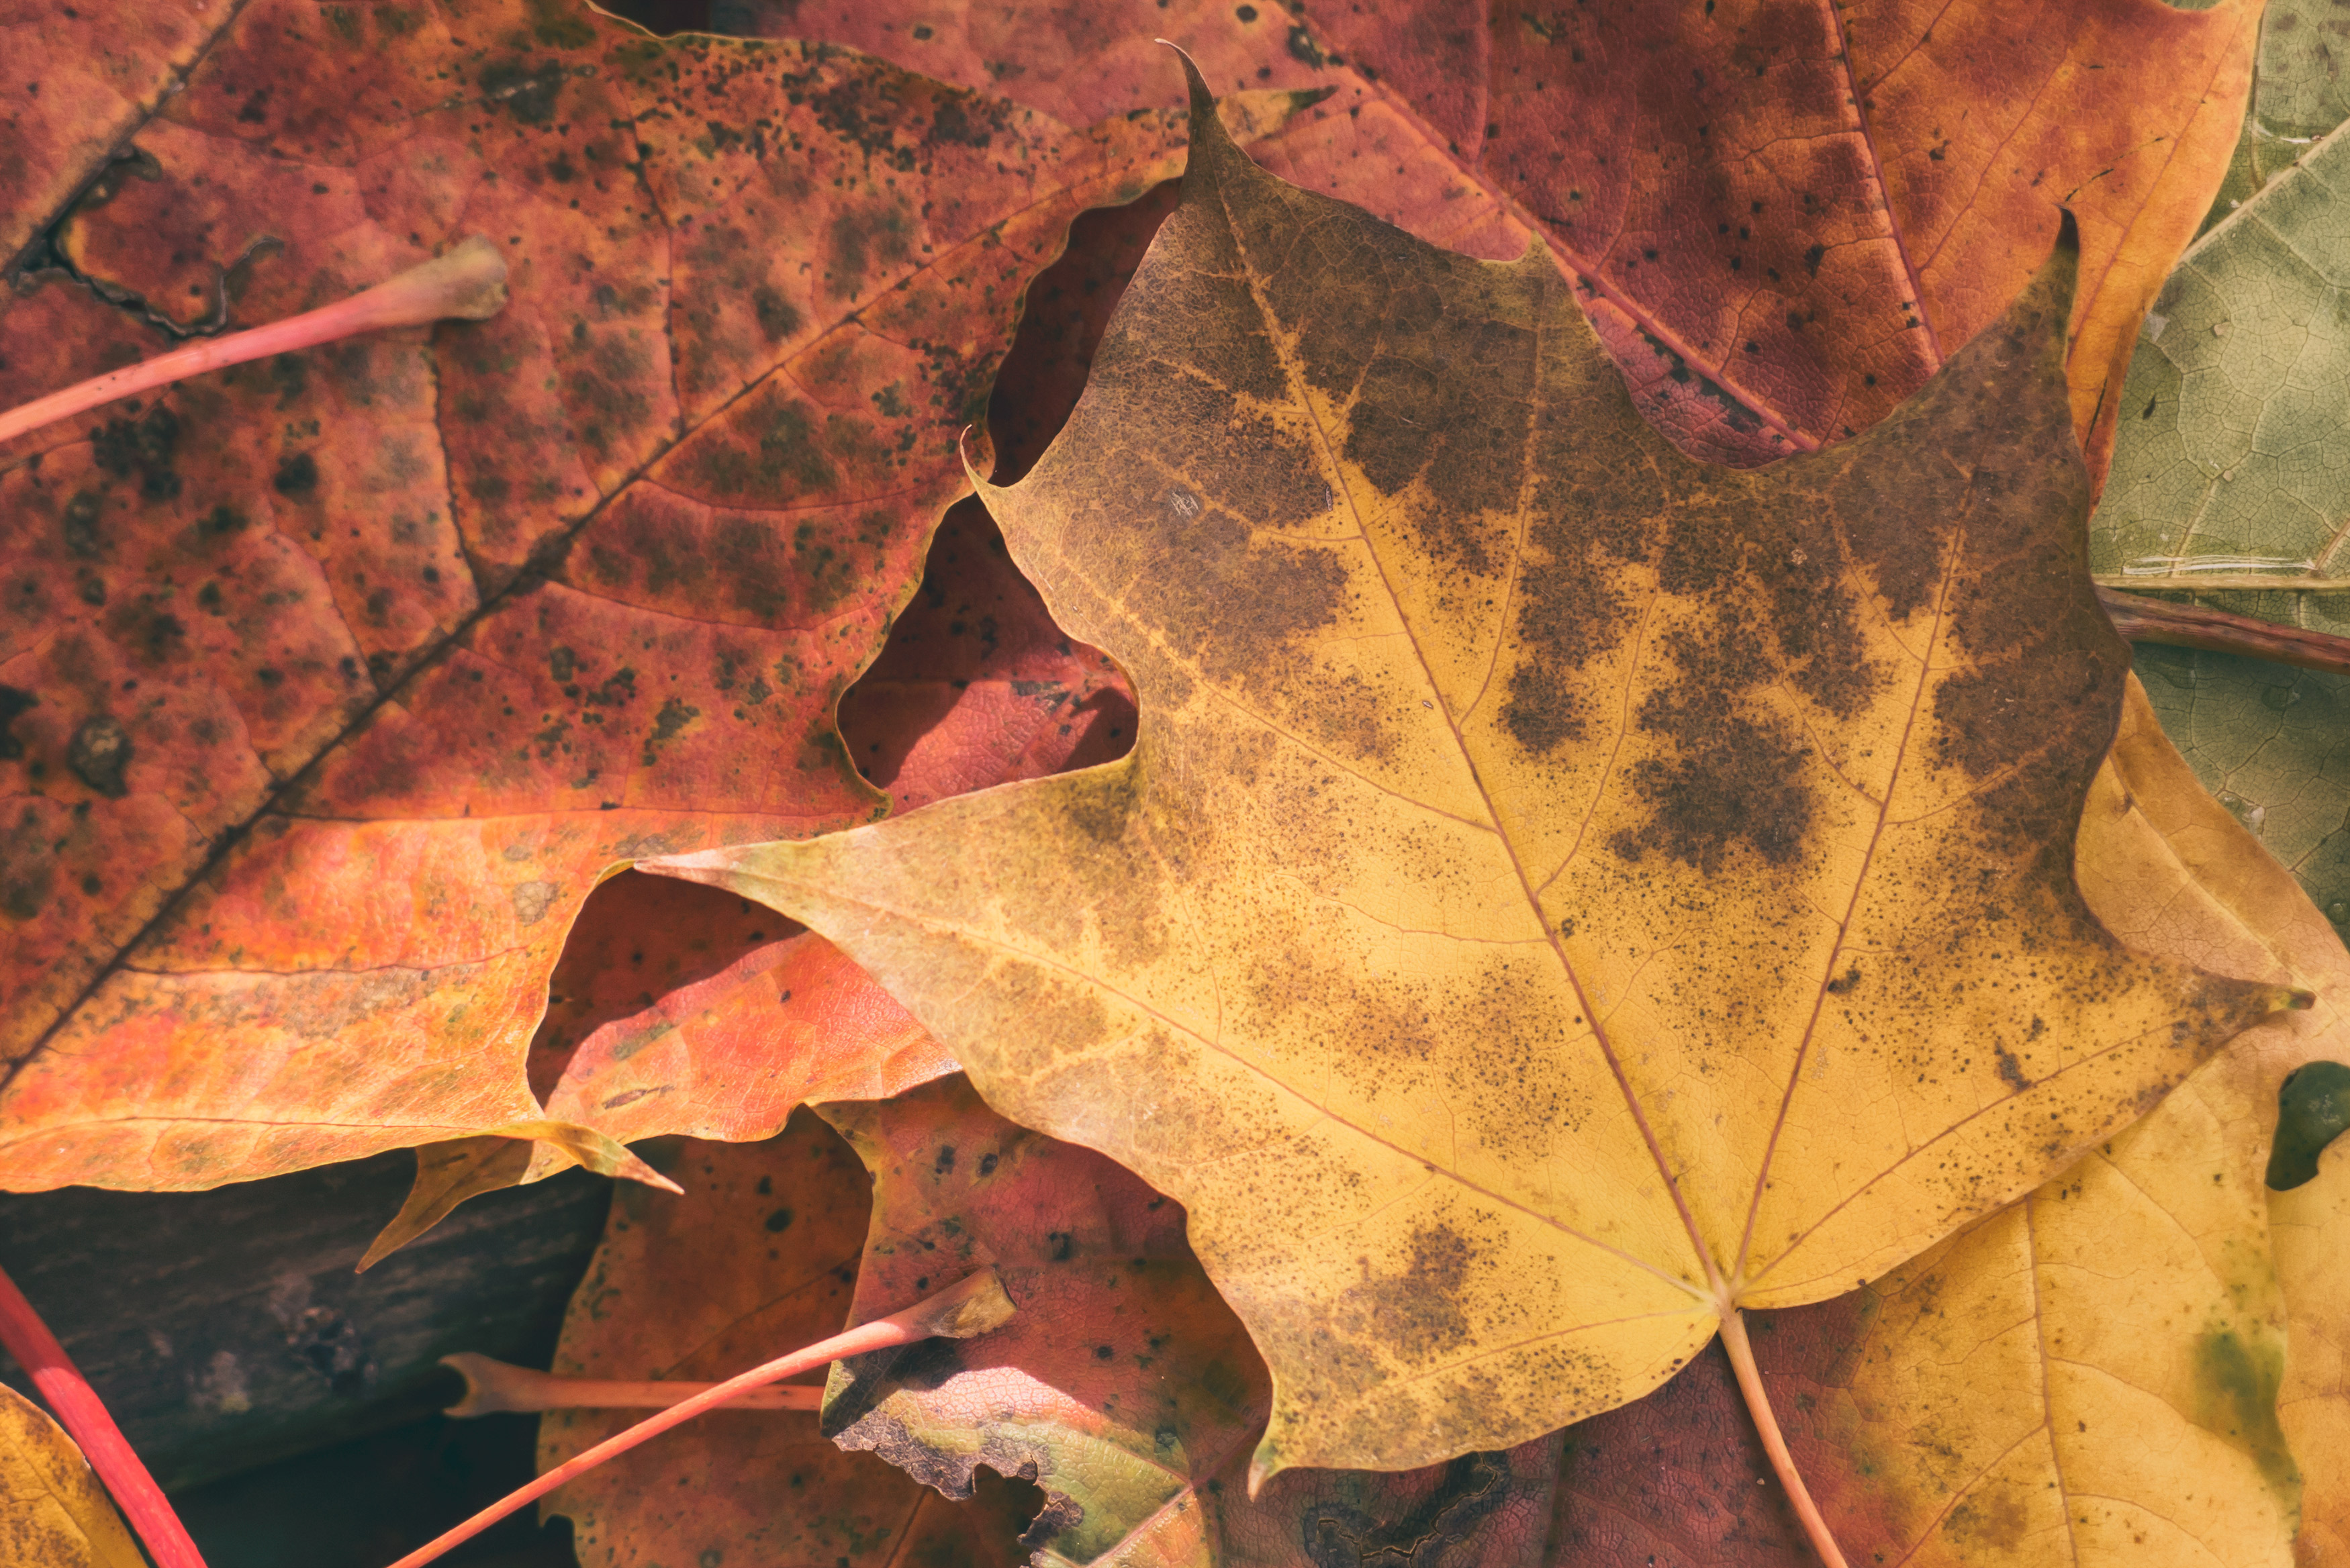 Free Image: Fall Leaves | Libreshot Public Domain Photos